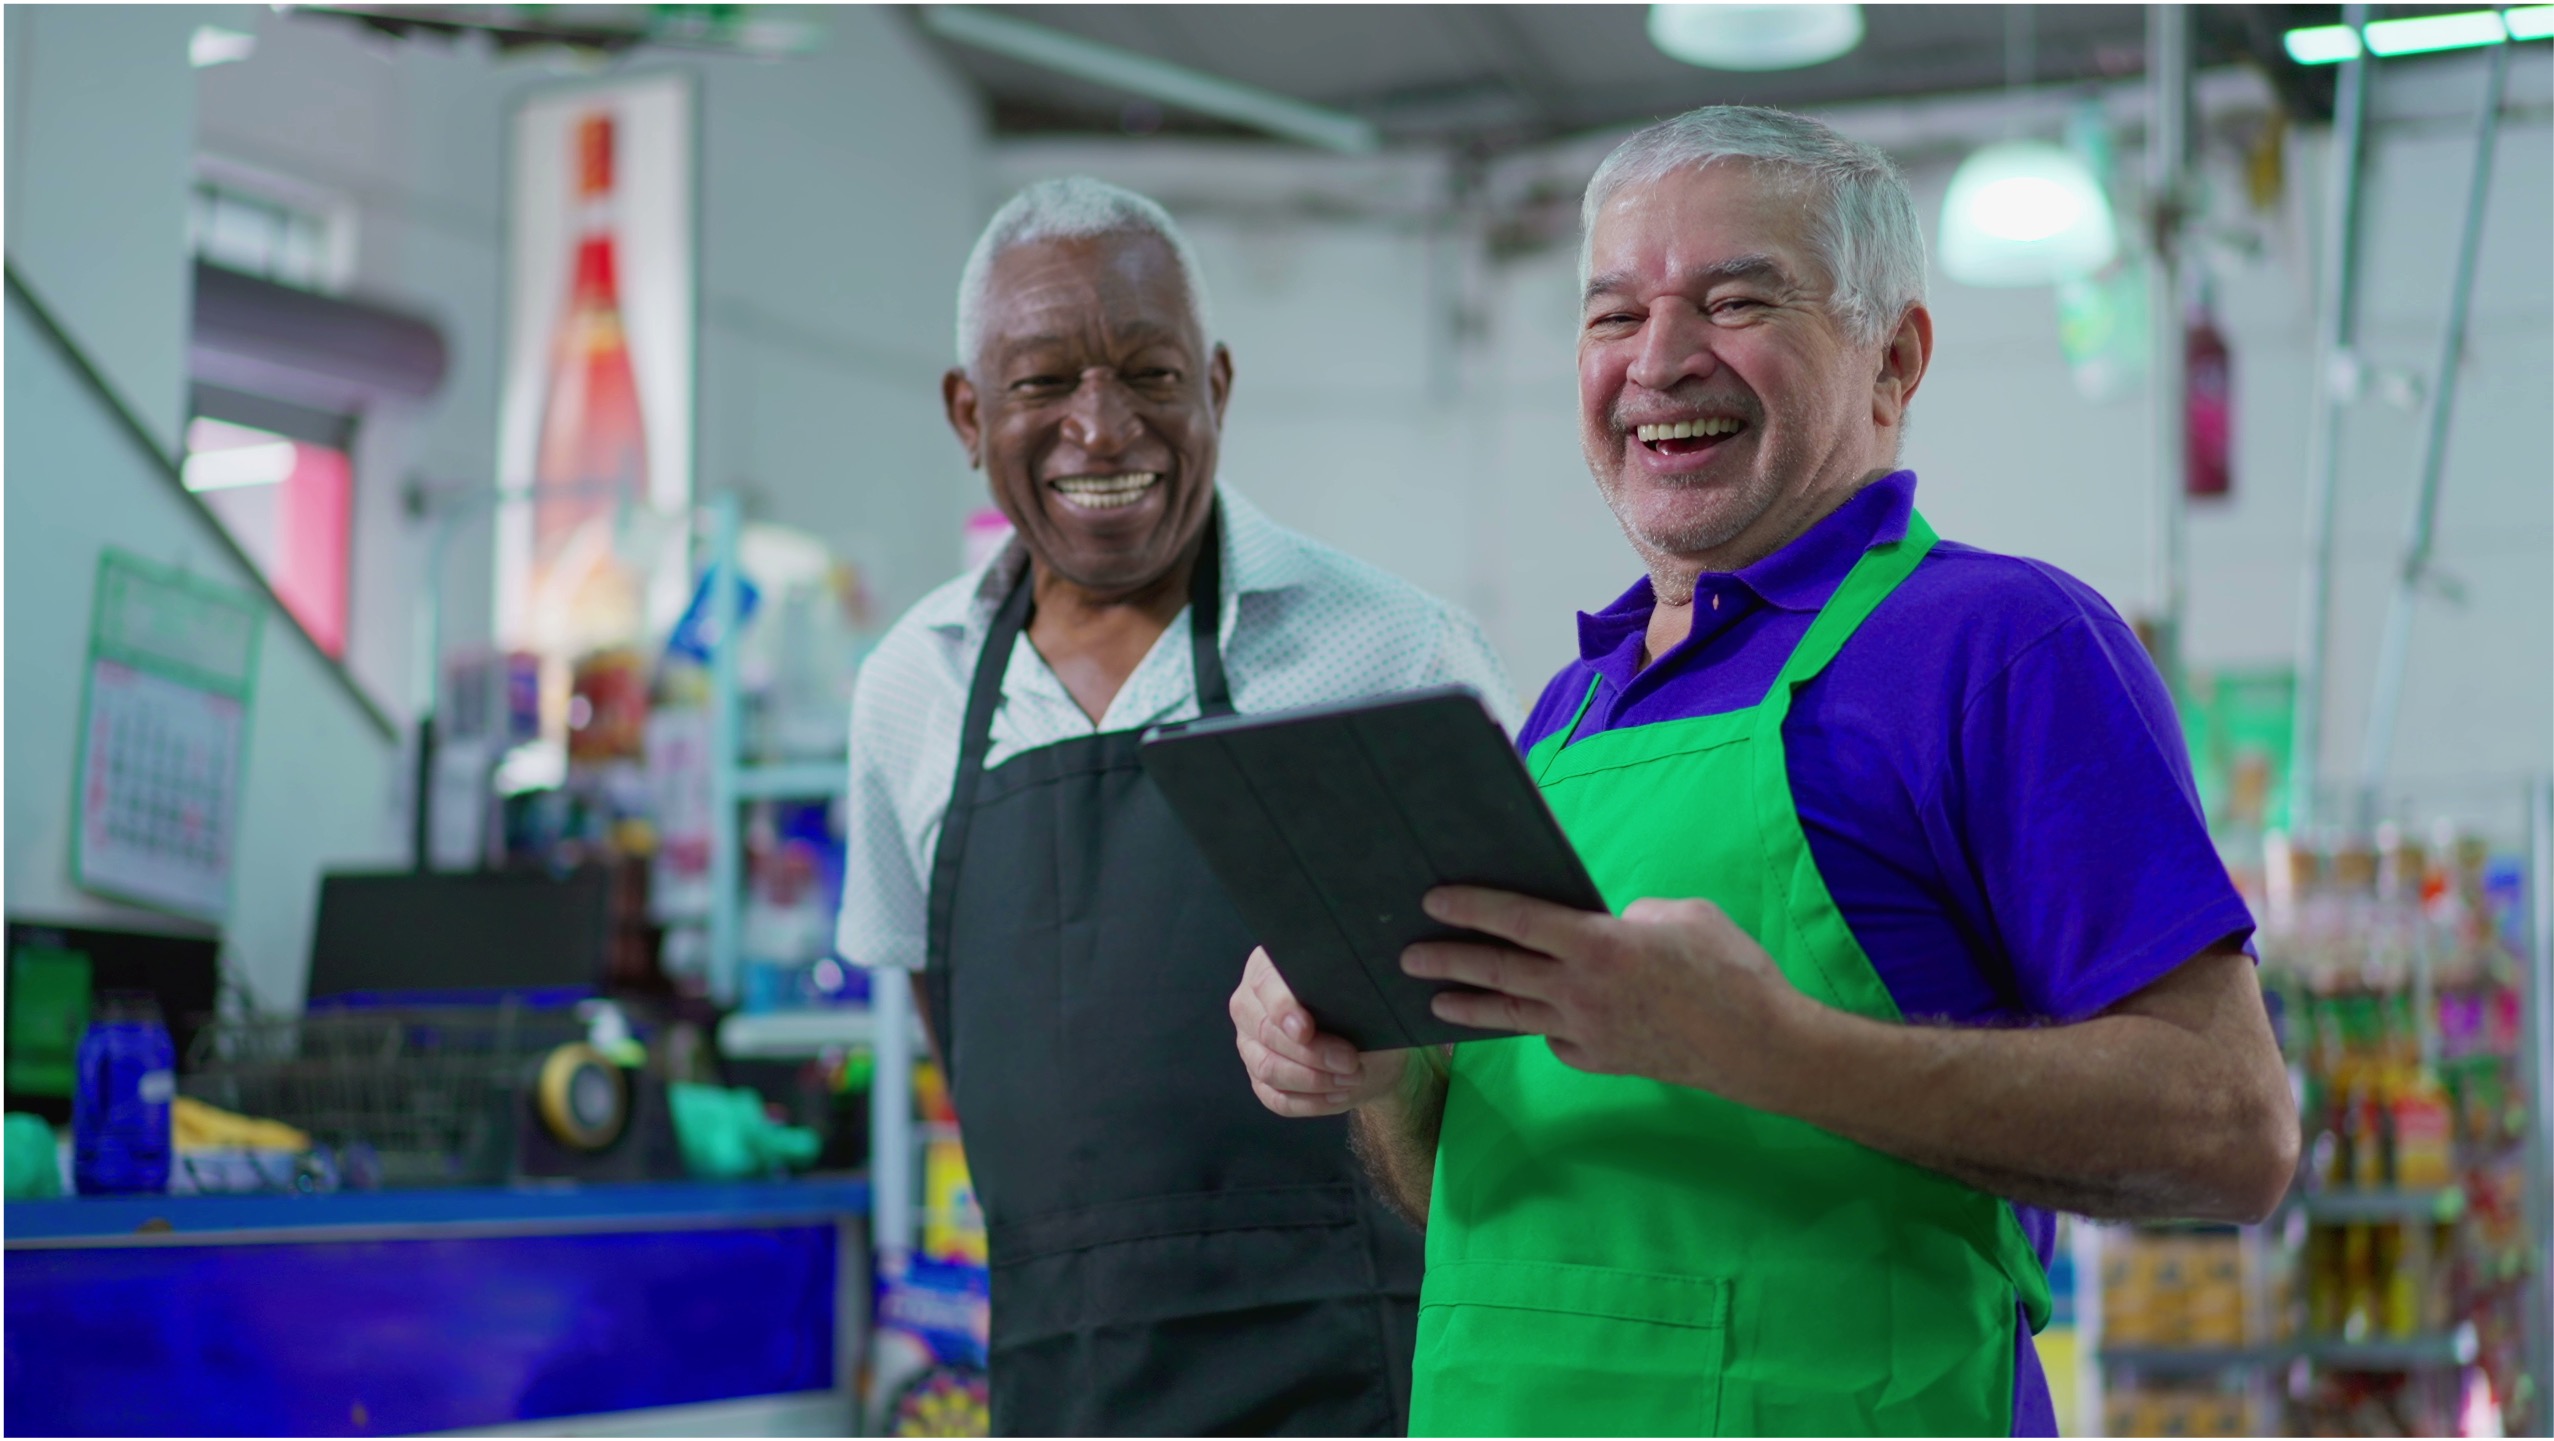 Two older gentleman smiling while at work